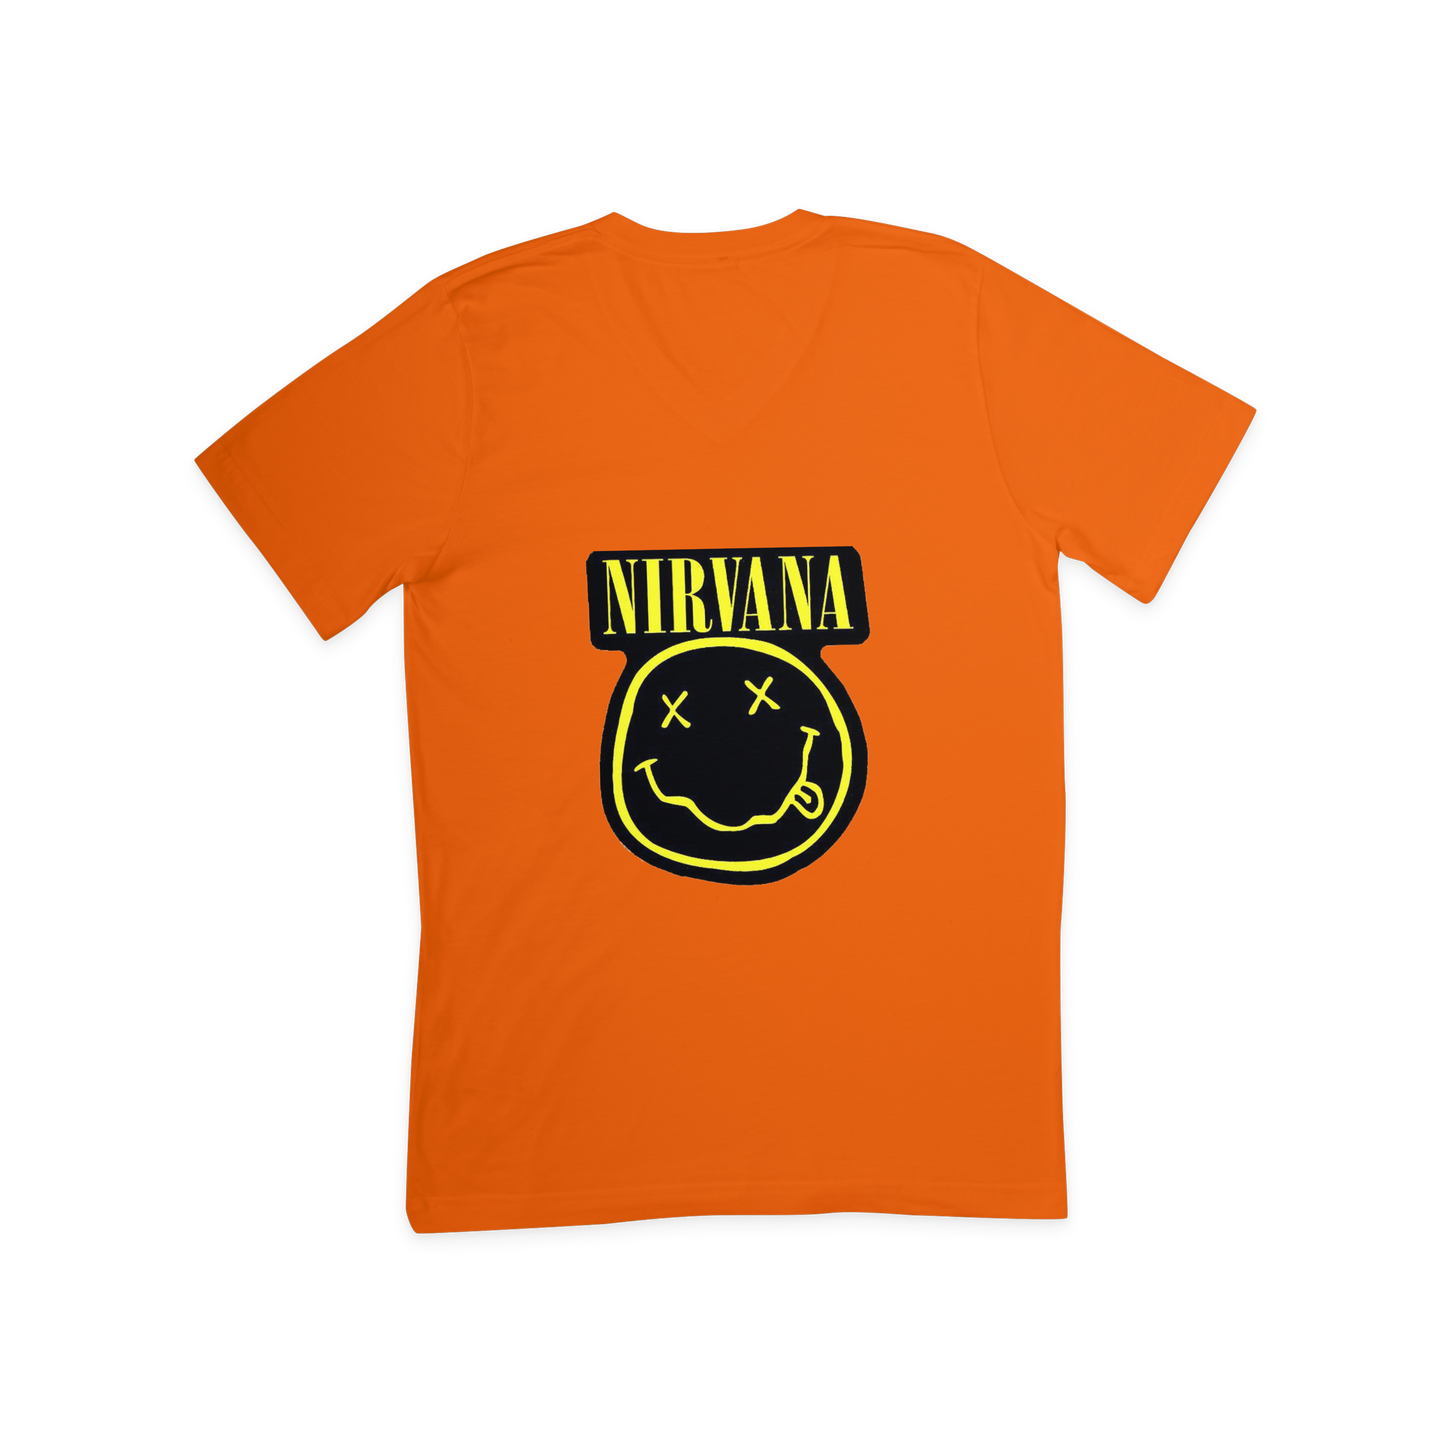 Nirvana design T shirt